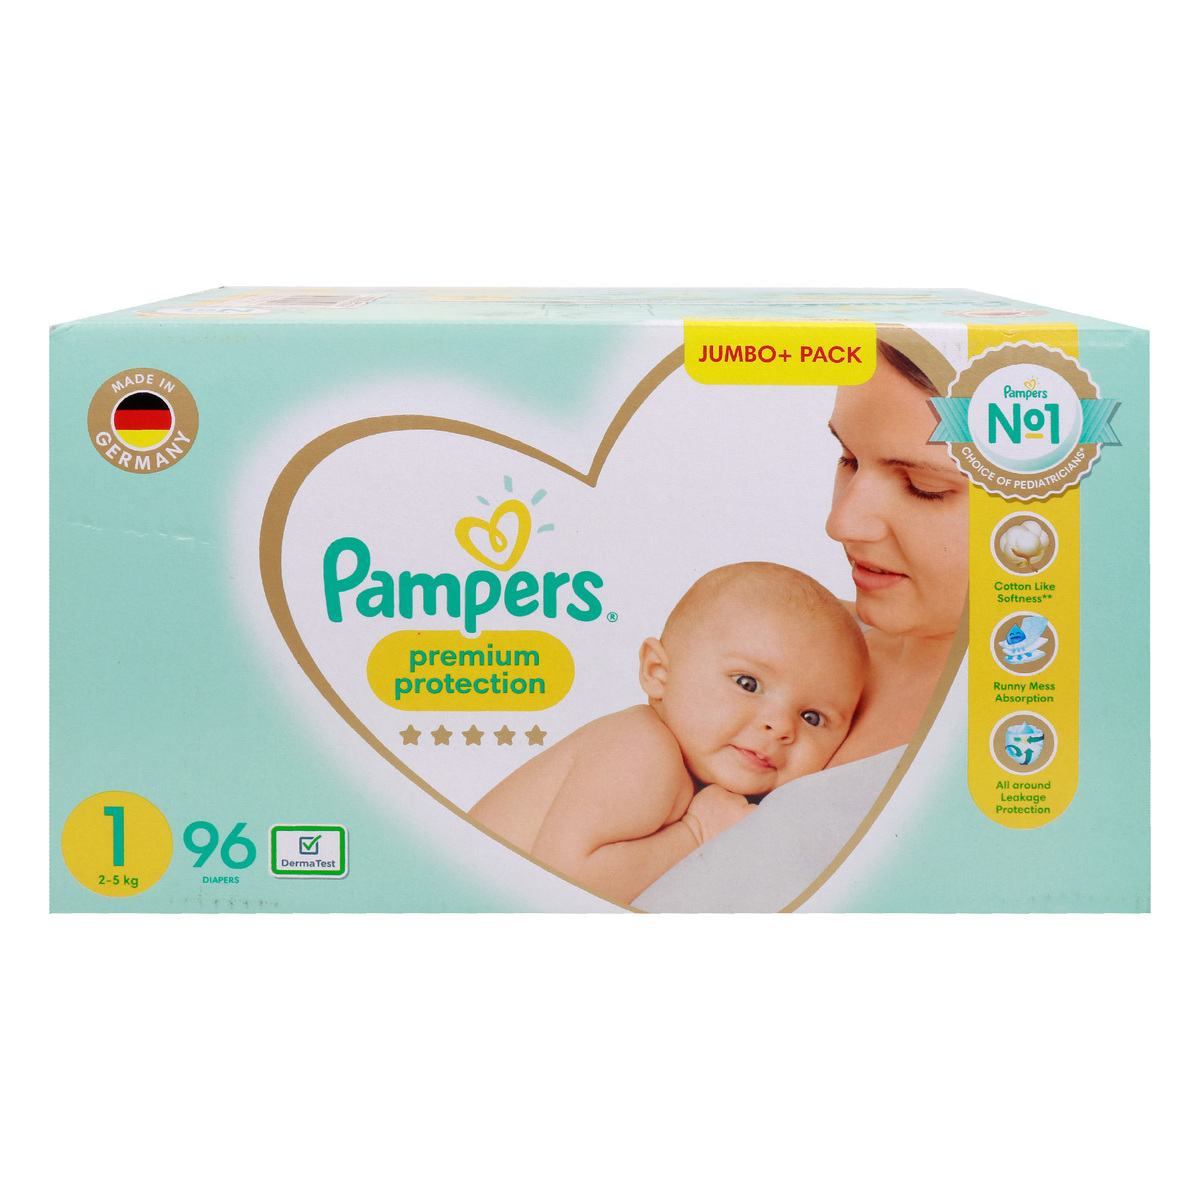 Pampers Premium Protection Diaper Size 1 2-5 kg 96 pcs